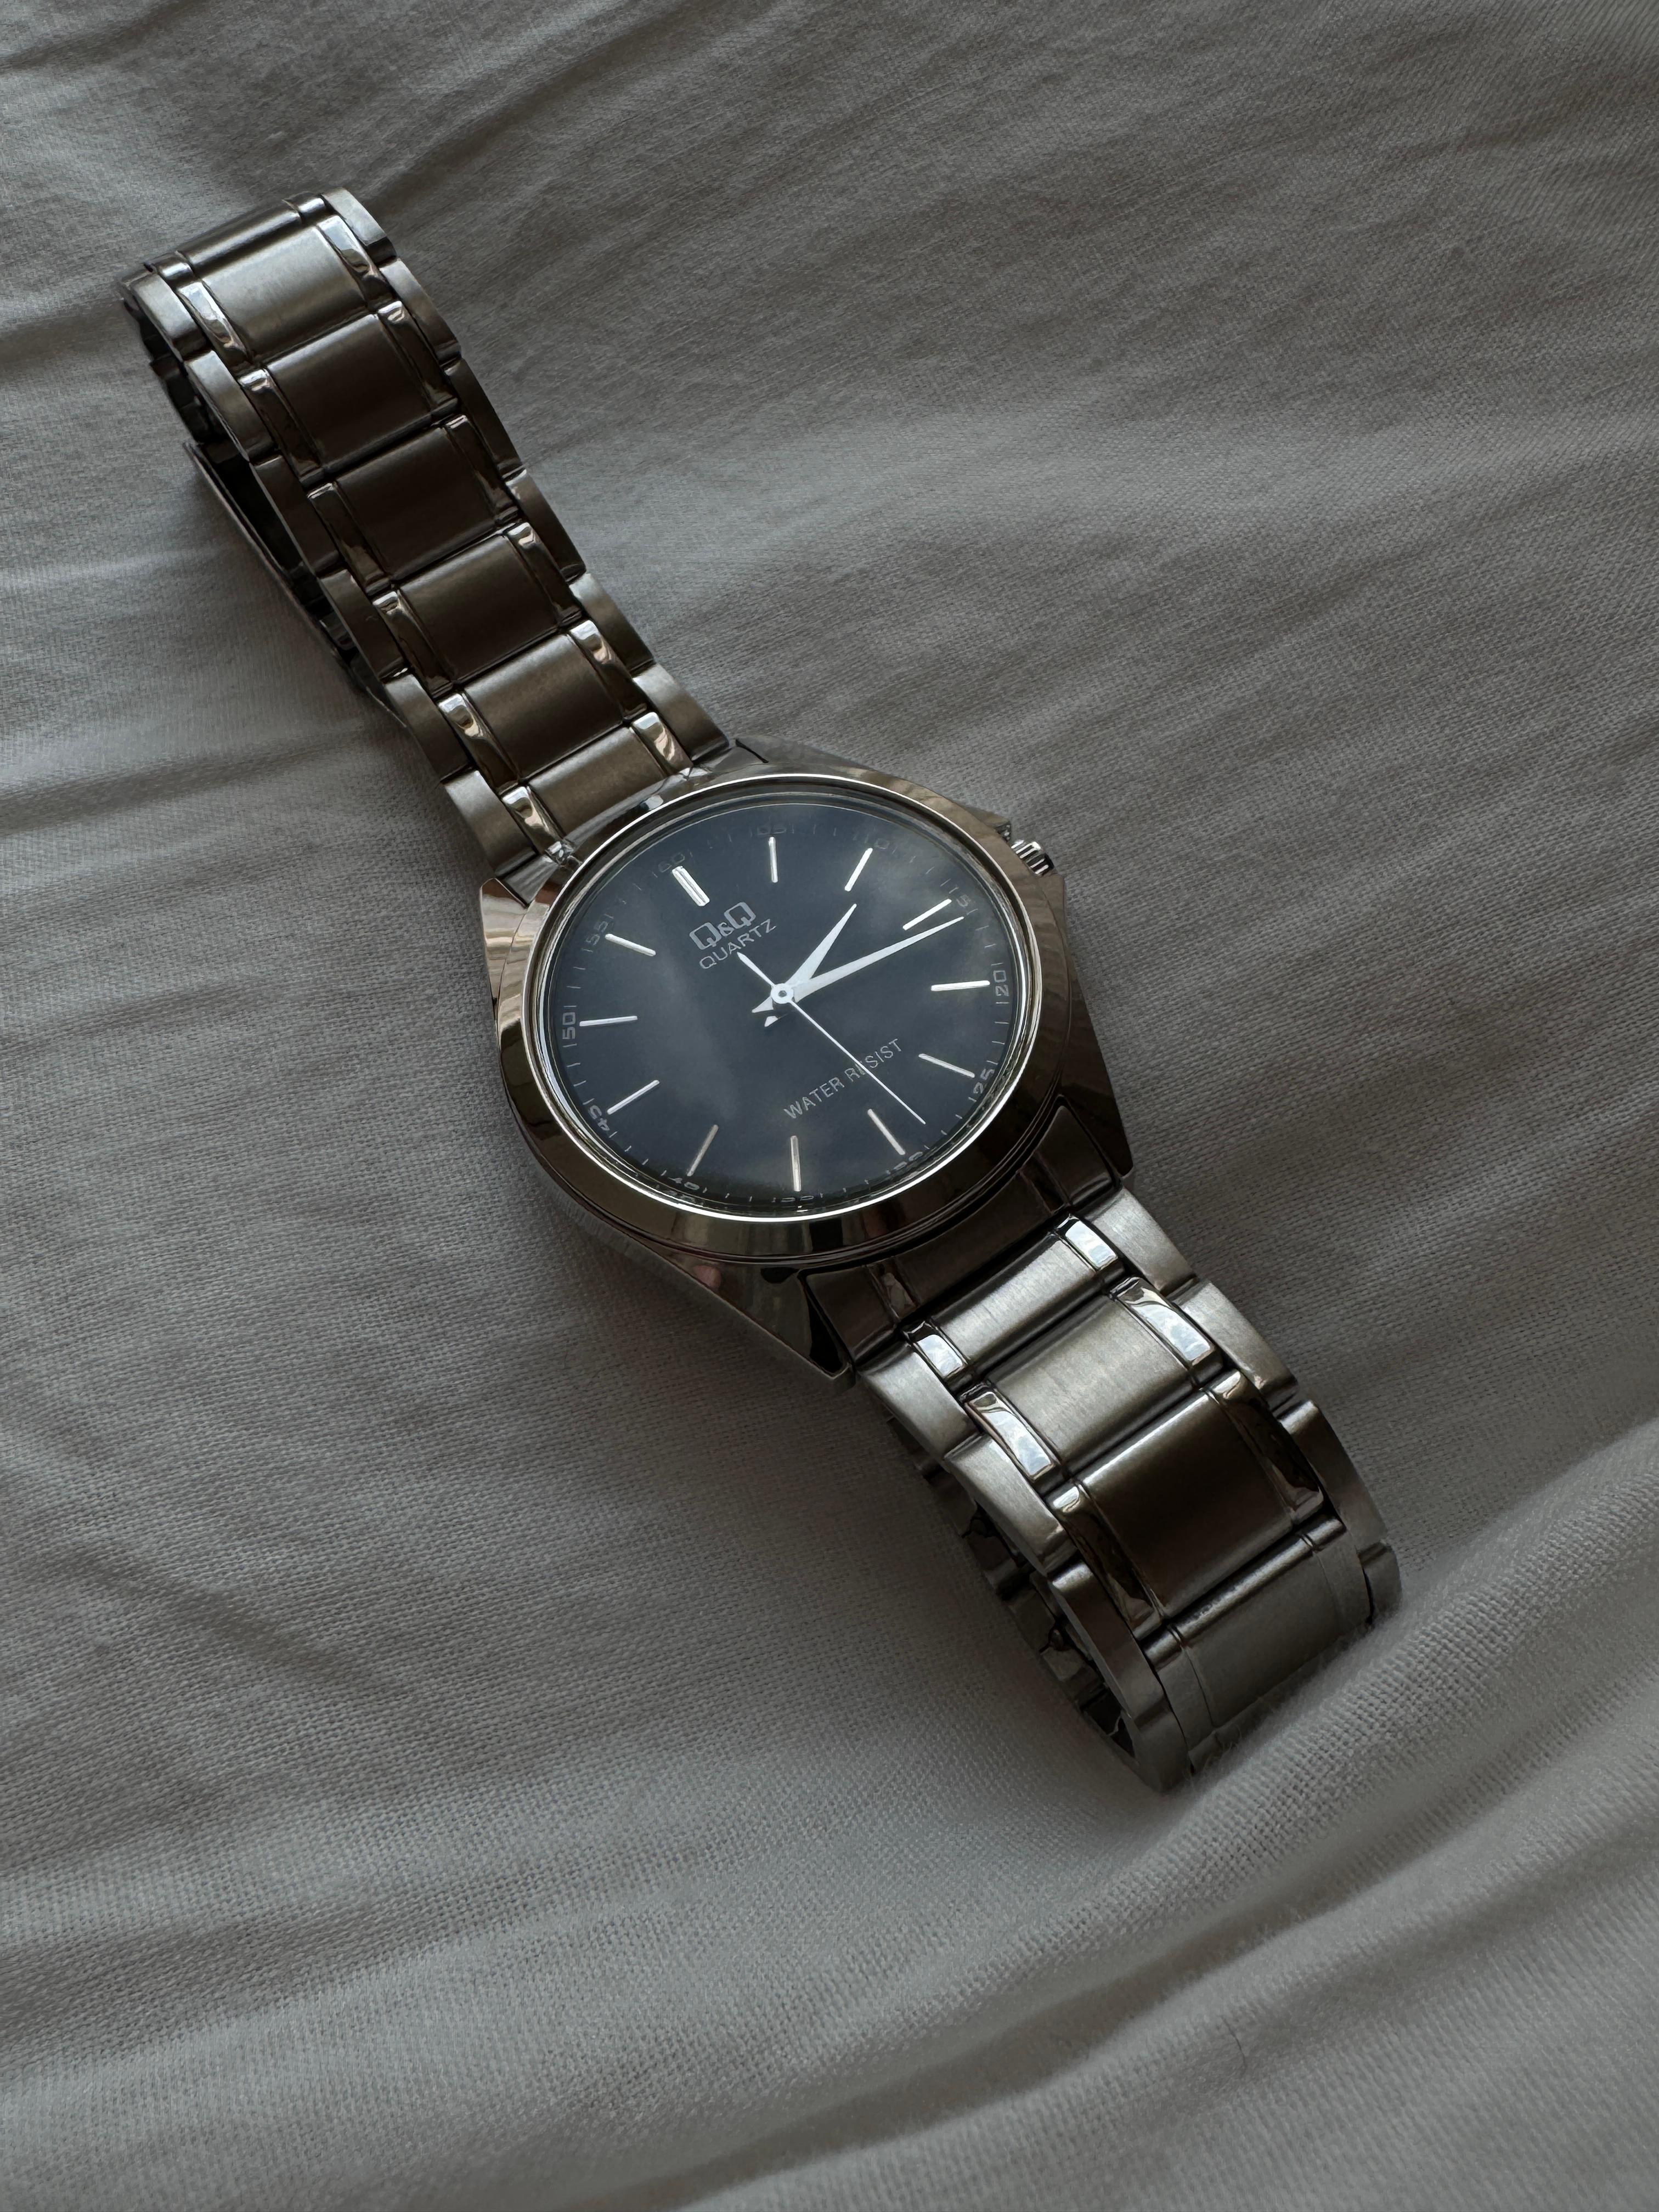 S.L Silver Vintage Wristwatch 